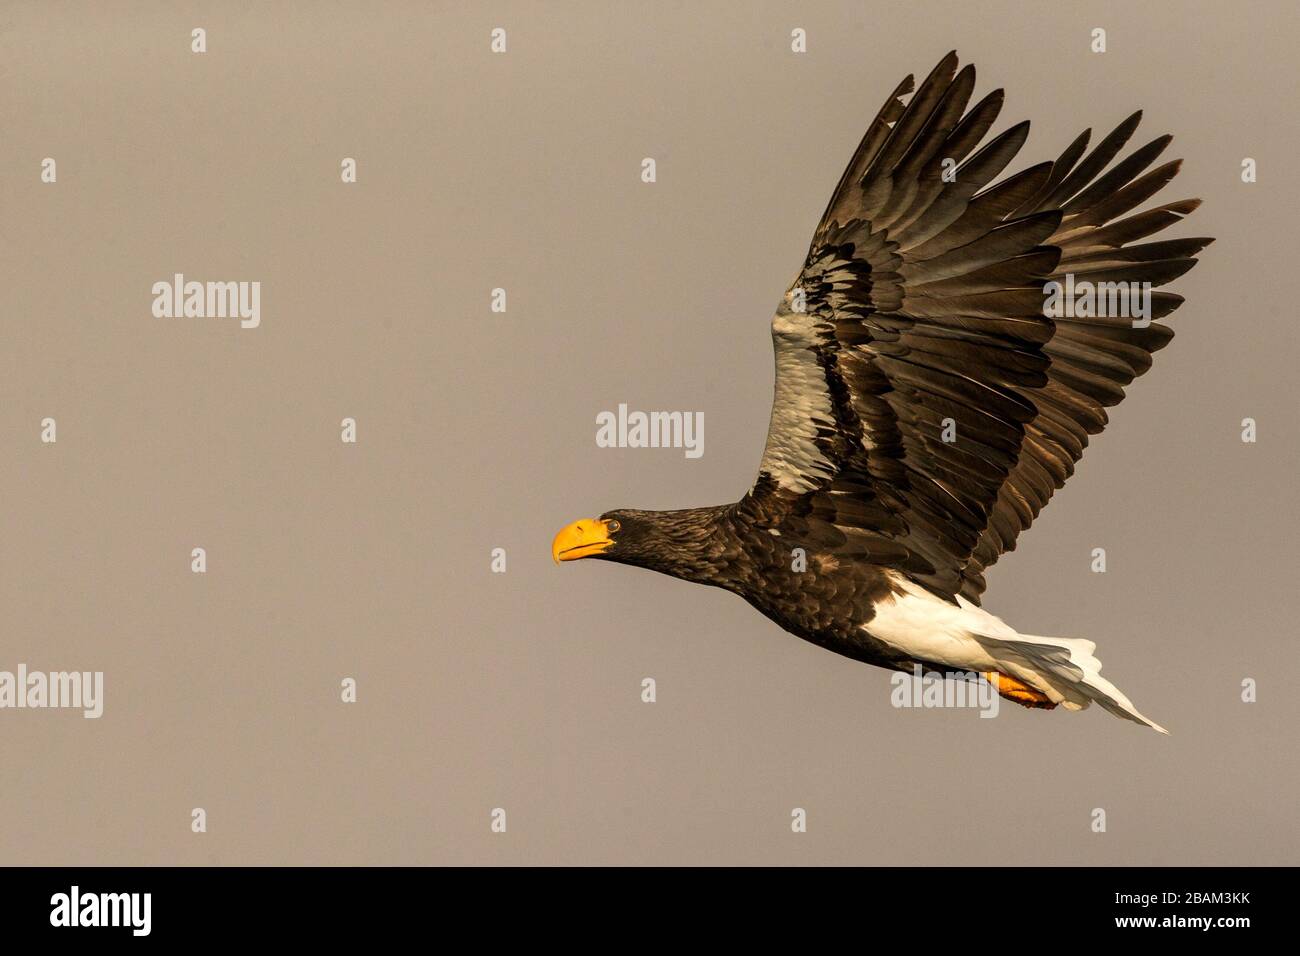 Steller's sea eagle in flight, eagle flying against clear sky in Hokkaido, Japan, silhouette of eagle at sunrise, majestic sea eagle, wildlife scene, Stock Photo